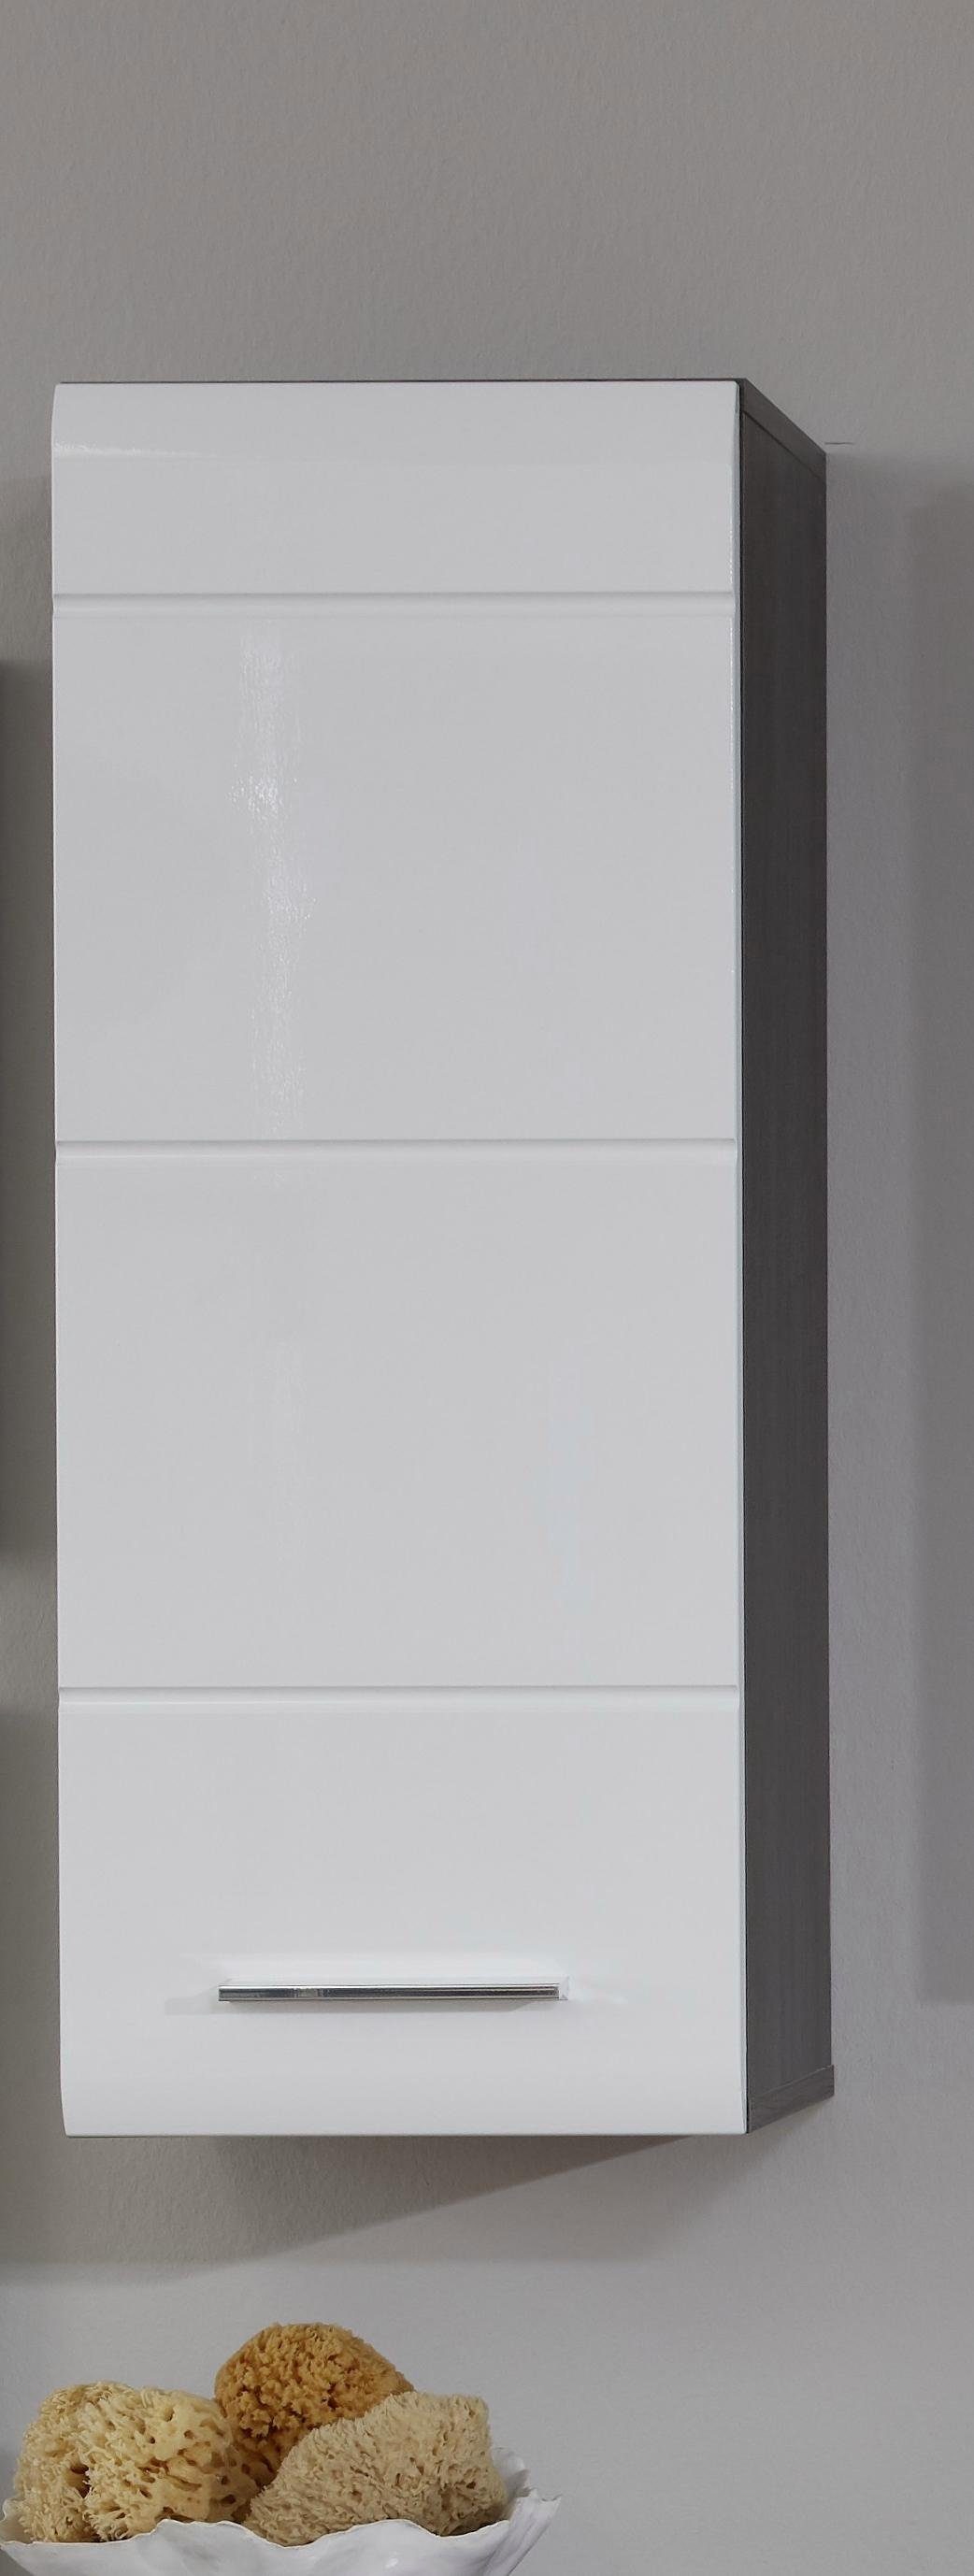 INOSIGN Hangend kastje Sovana Hoogte 77 cm, badkamerkast met fronten in hoogglans- of hout-look